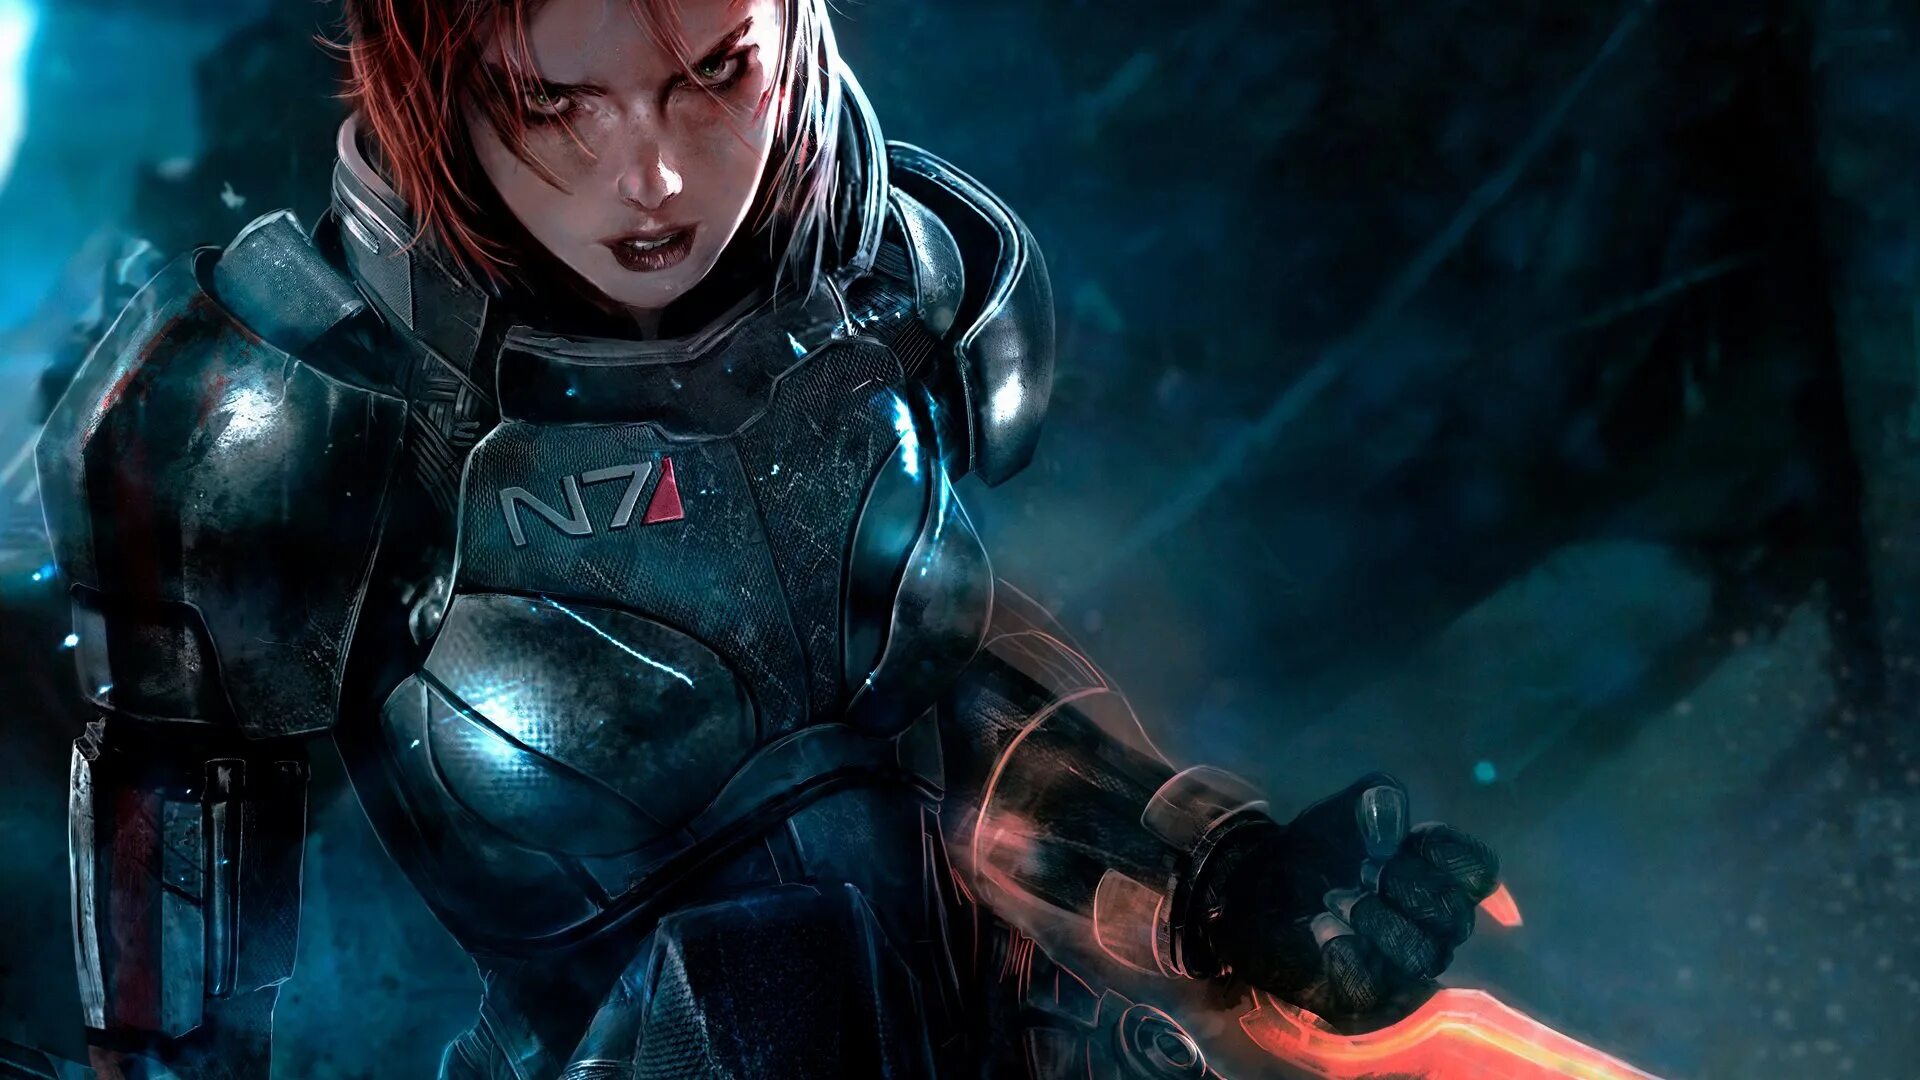 3 1920x1080. Джейн Шепард. Джейн Шепард Жнец. Джейн Шепард арт. Mass Effect 3 Шепард женщина.